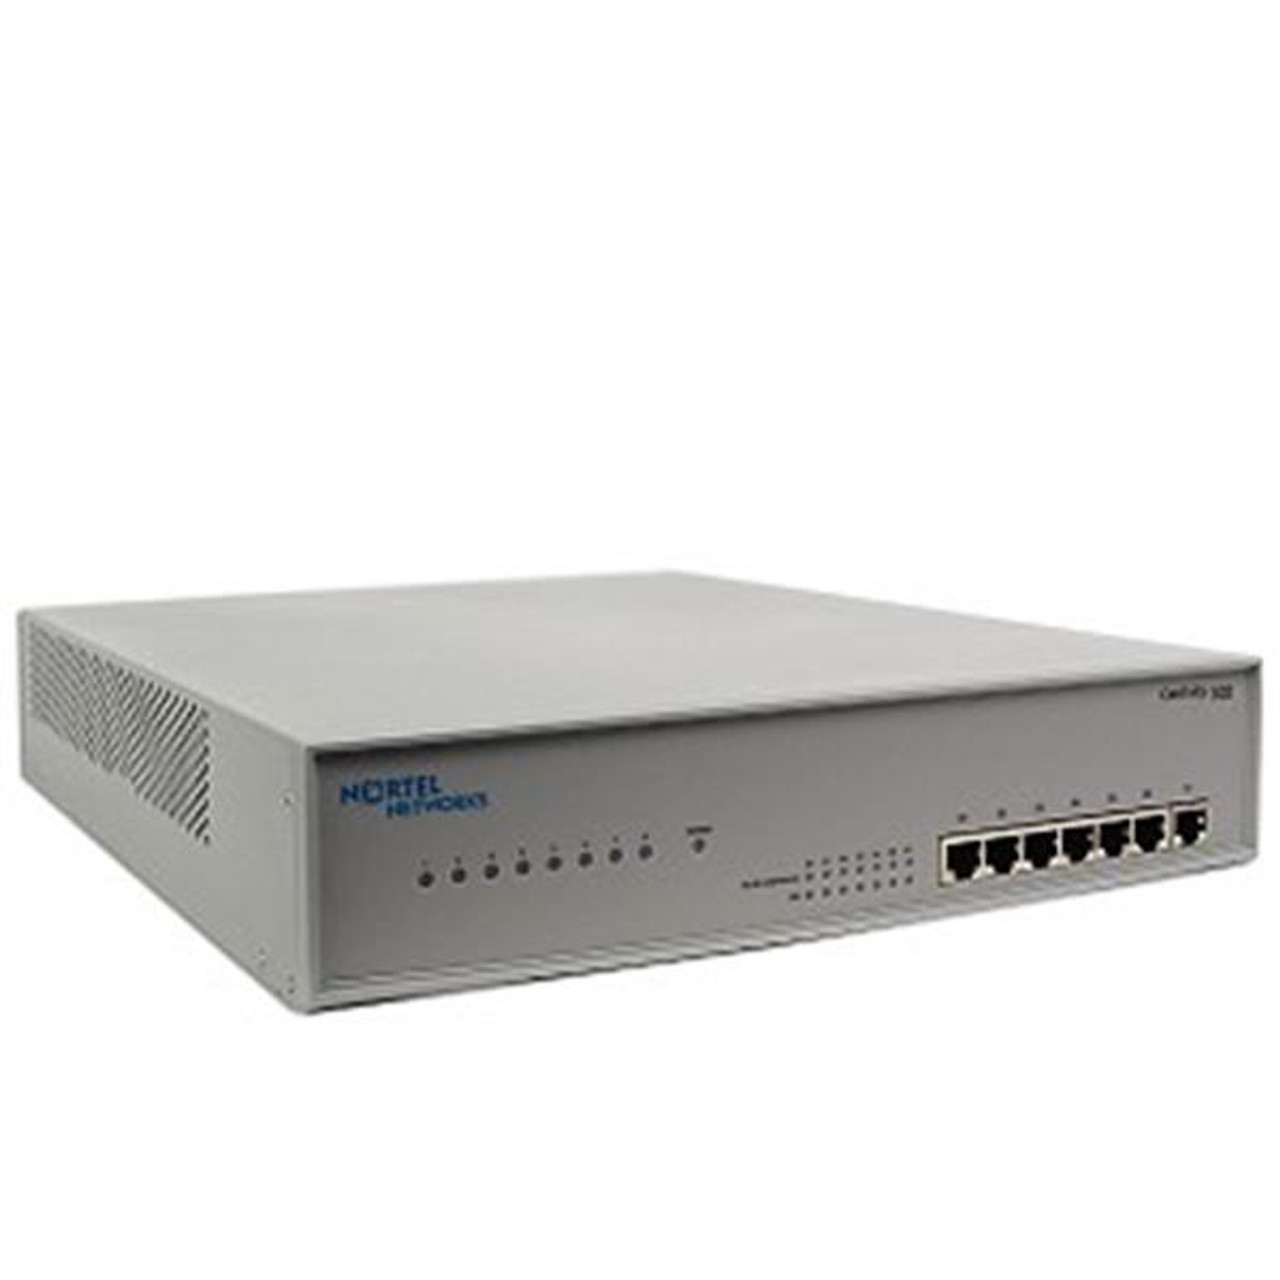 DM1401E68 Nortel Contivity 100 Dual-Ethernet with single Analog modem DES encryption